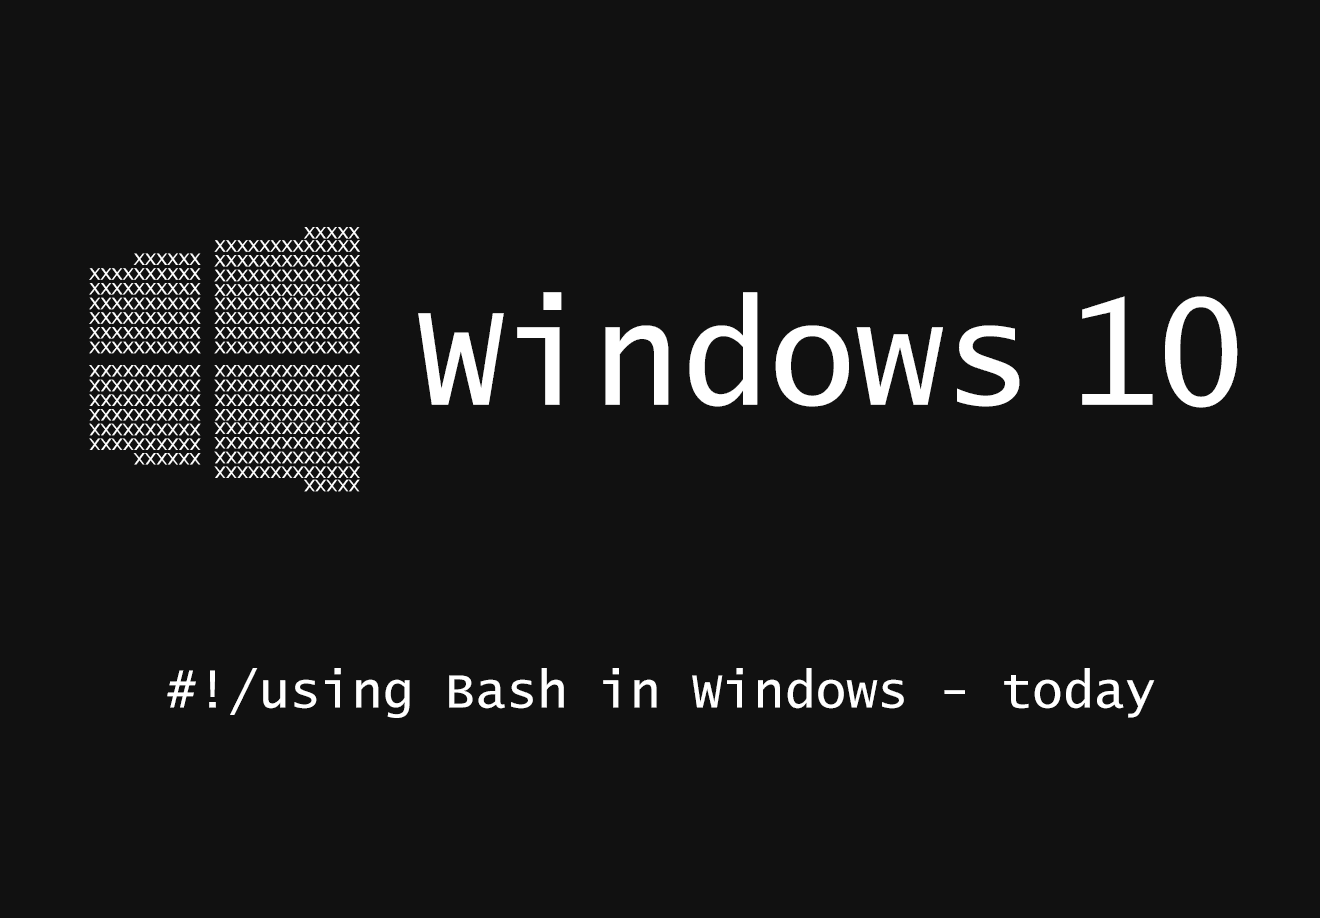 Bash in Windows